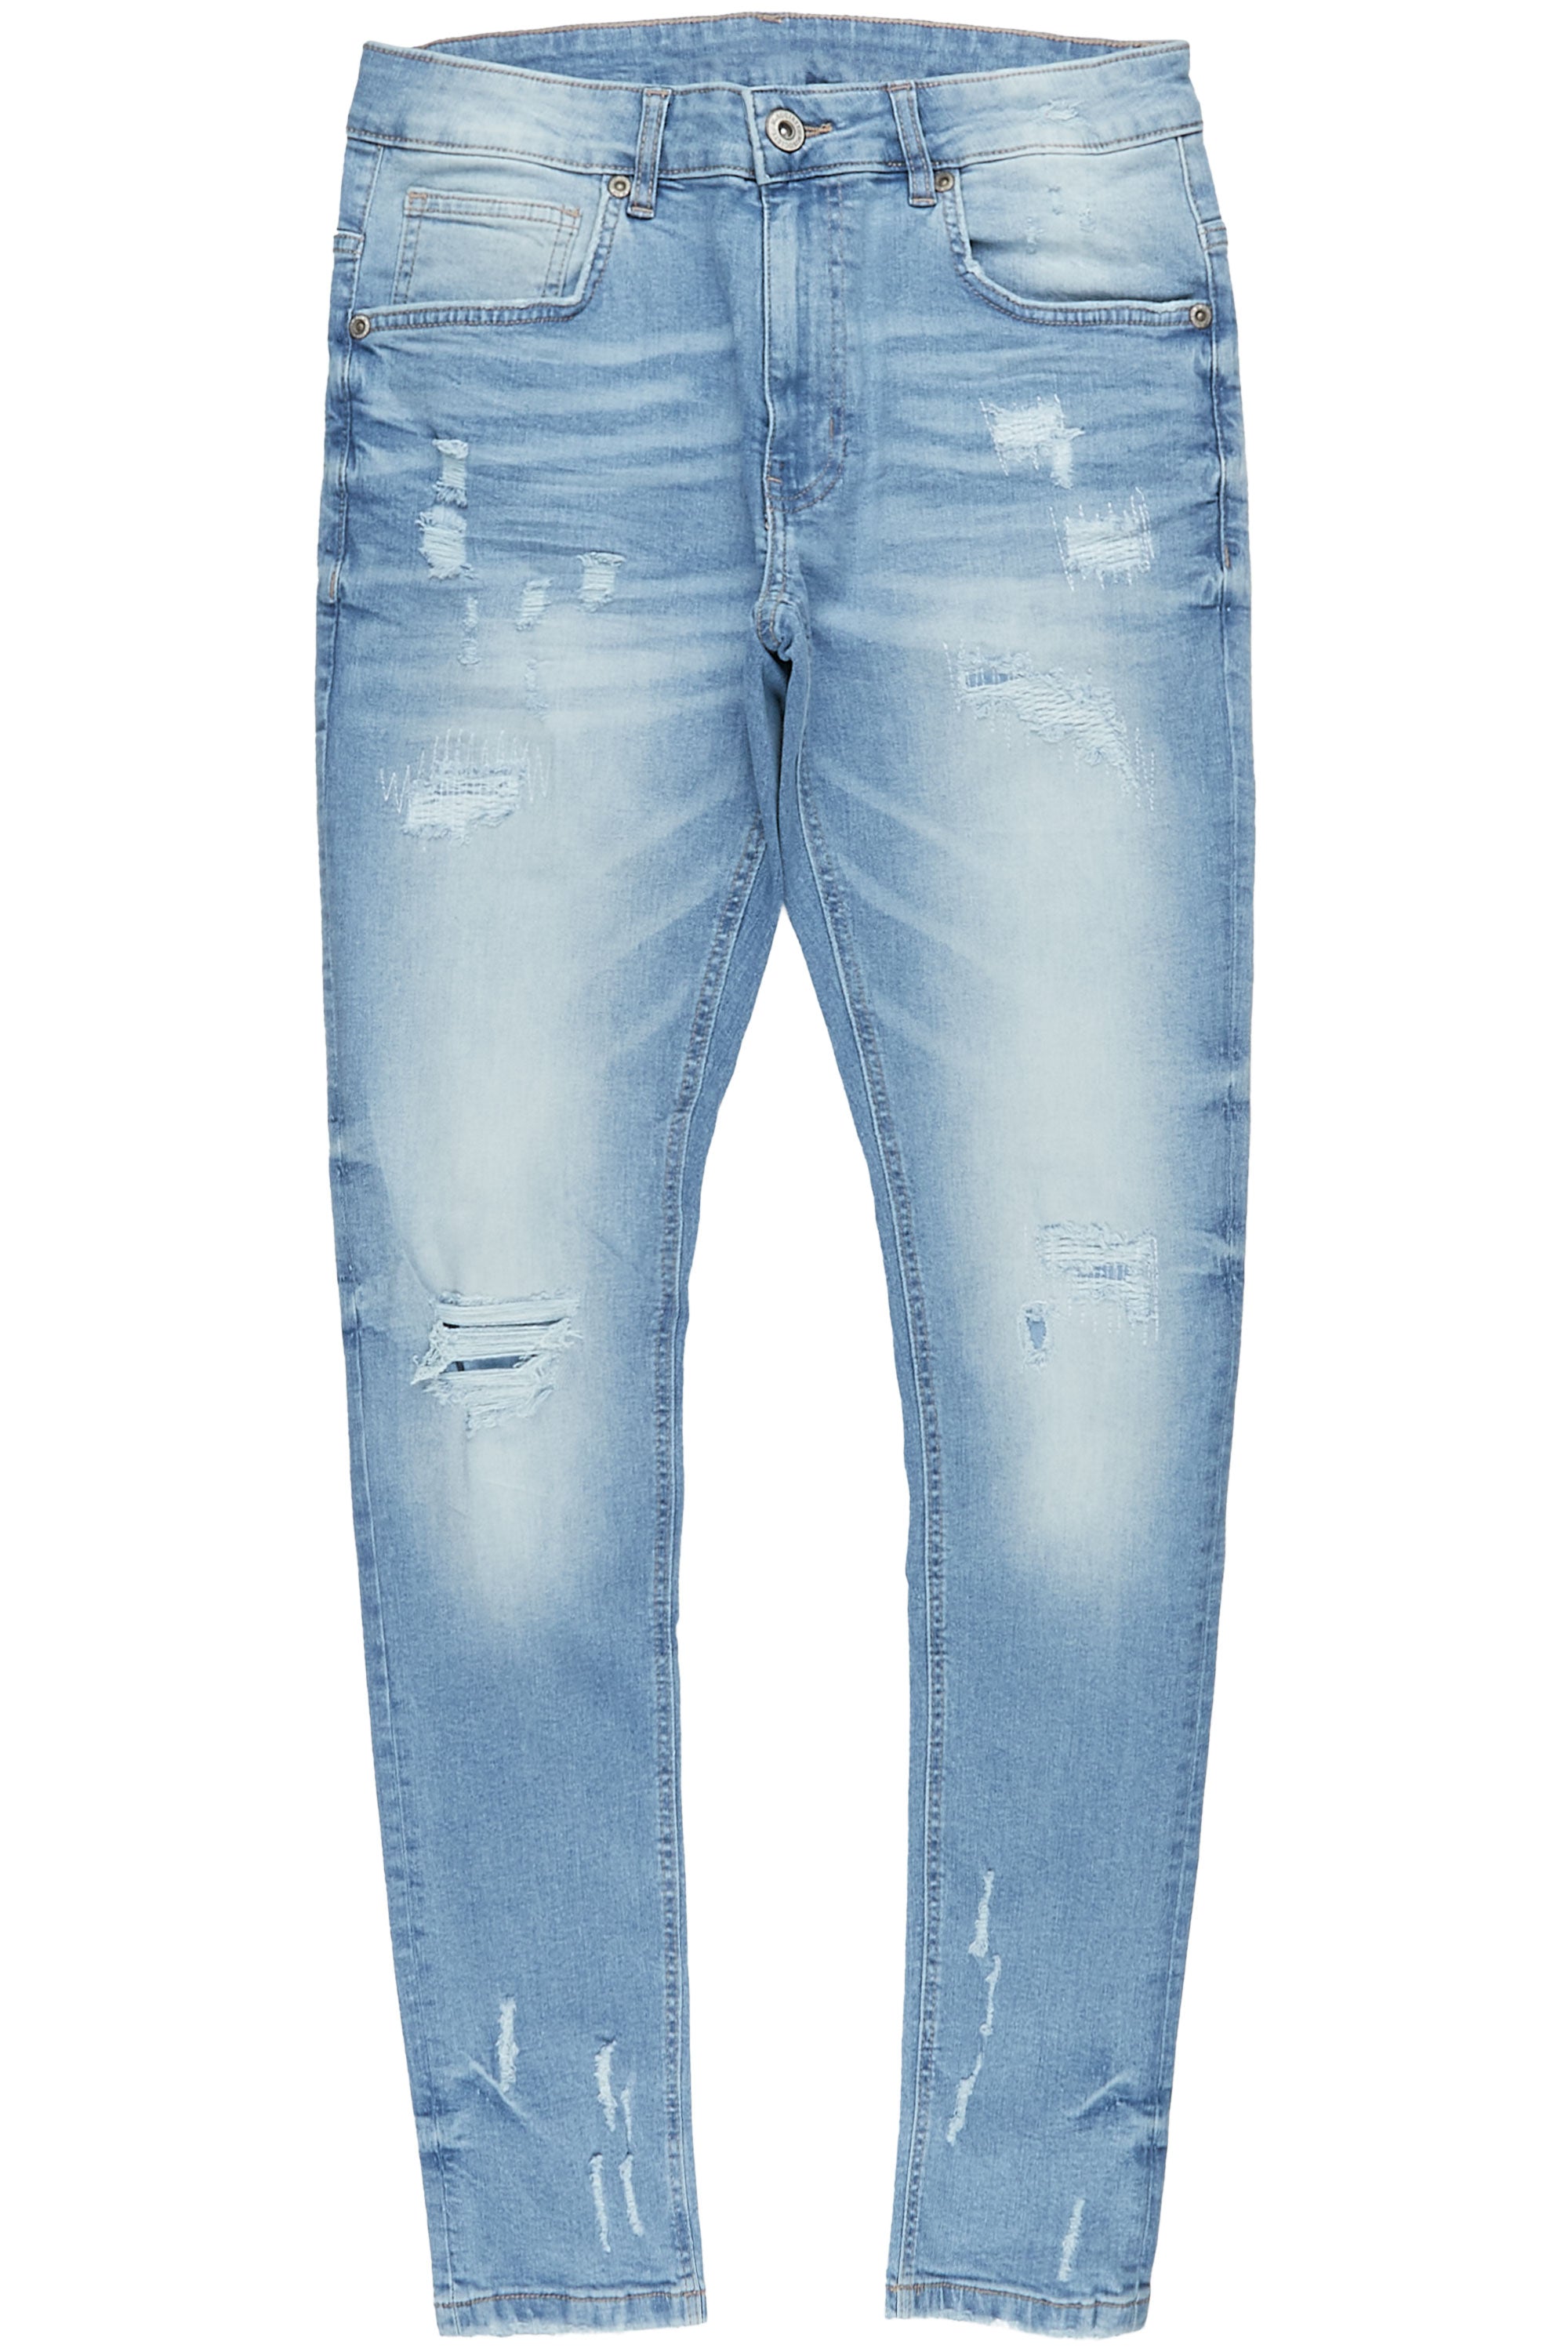 Kaycee Light Blue 5 Pocket Jean